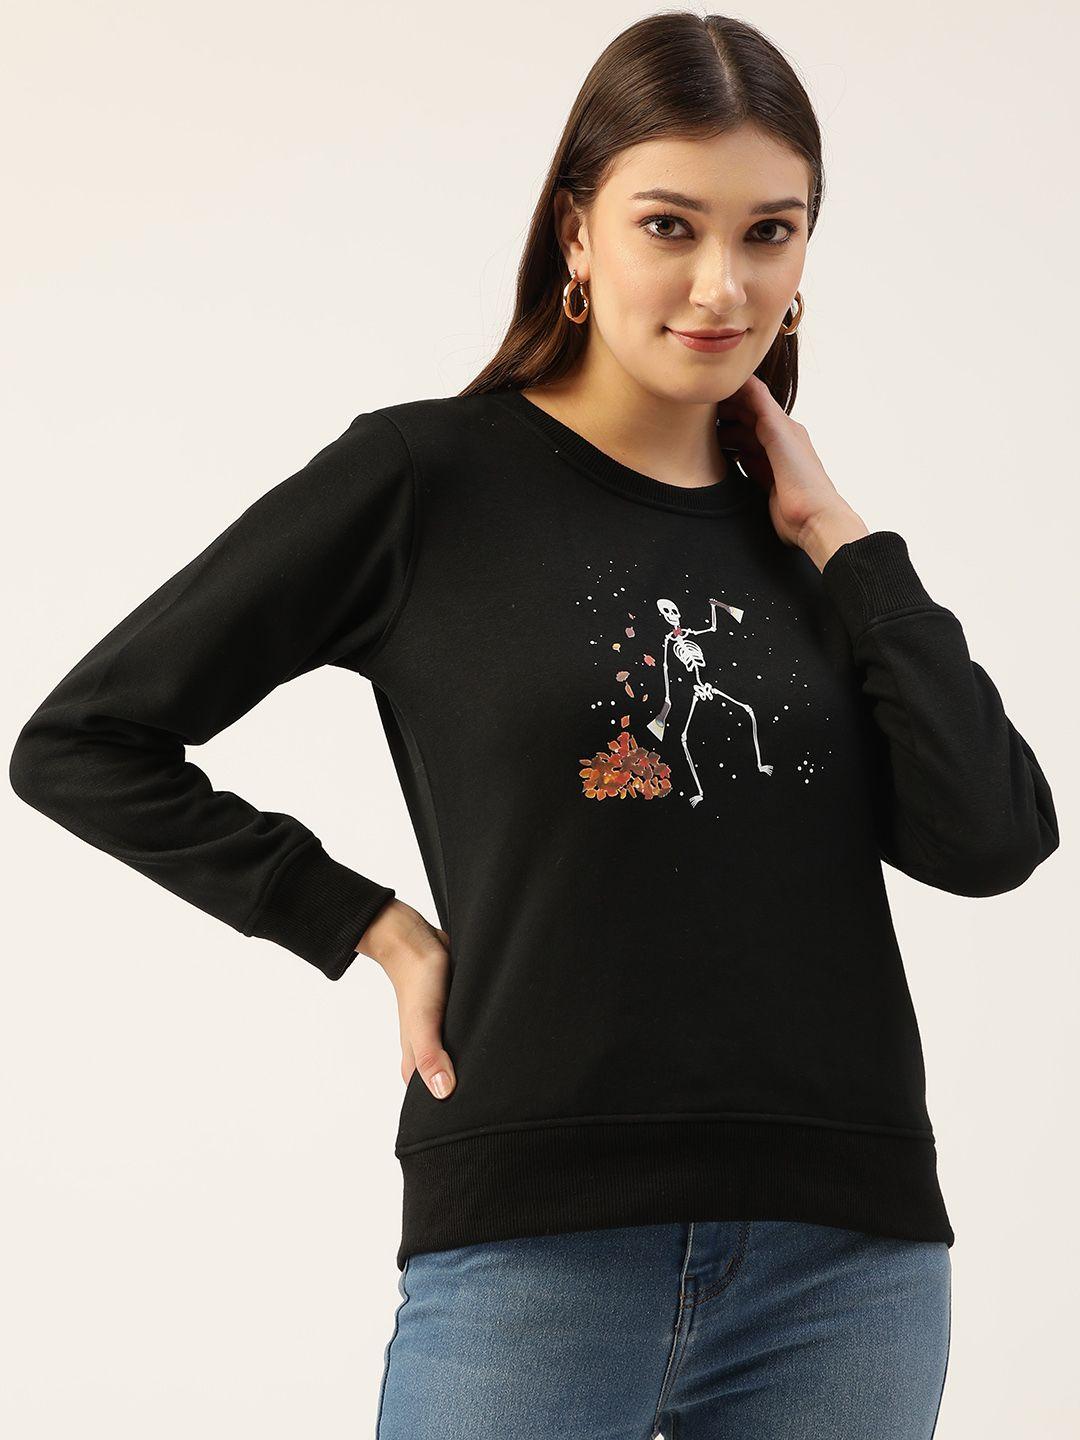 clovia-women-black-printed-sweatshirt